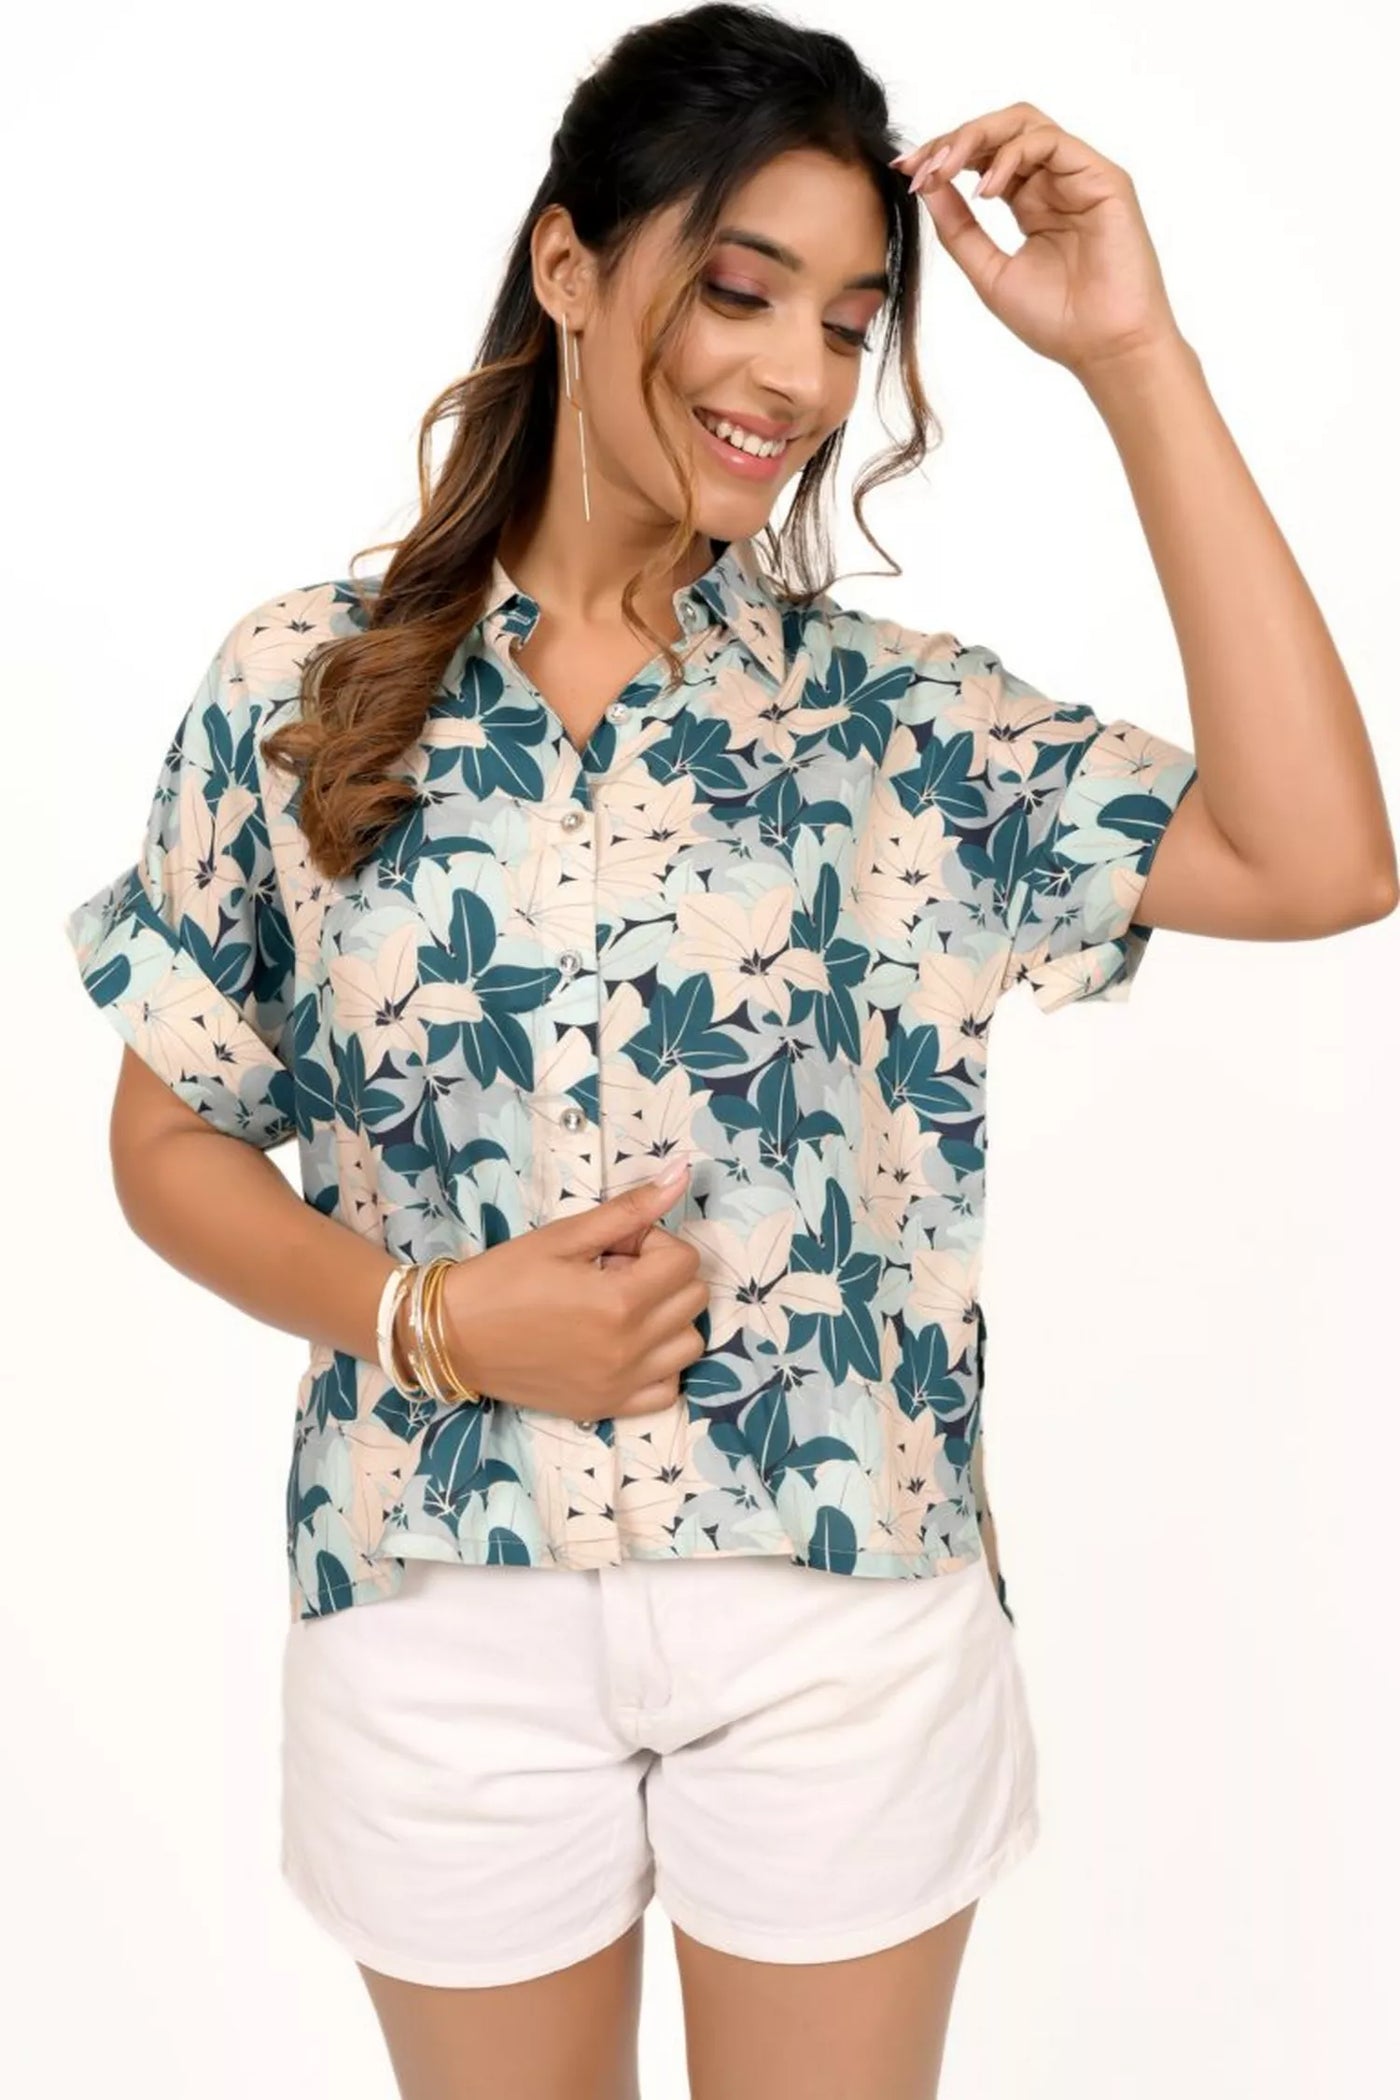 Teal Blue And Beige Tropical Print Shirt